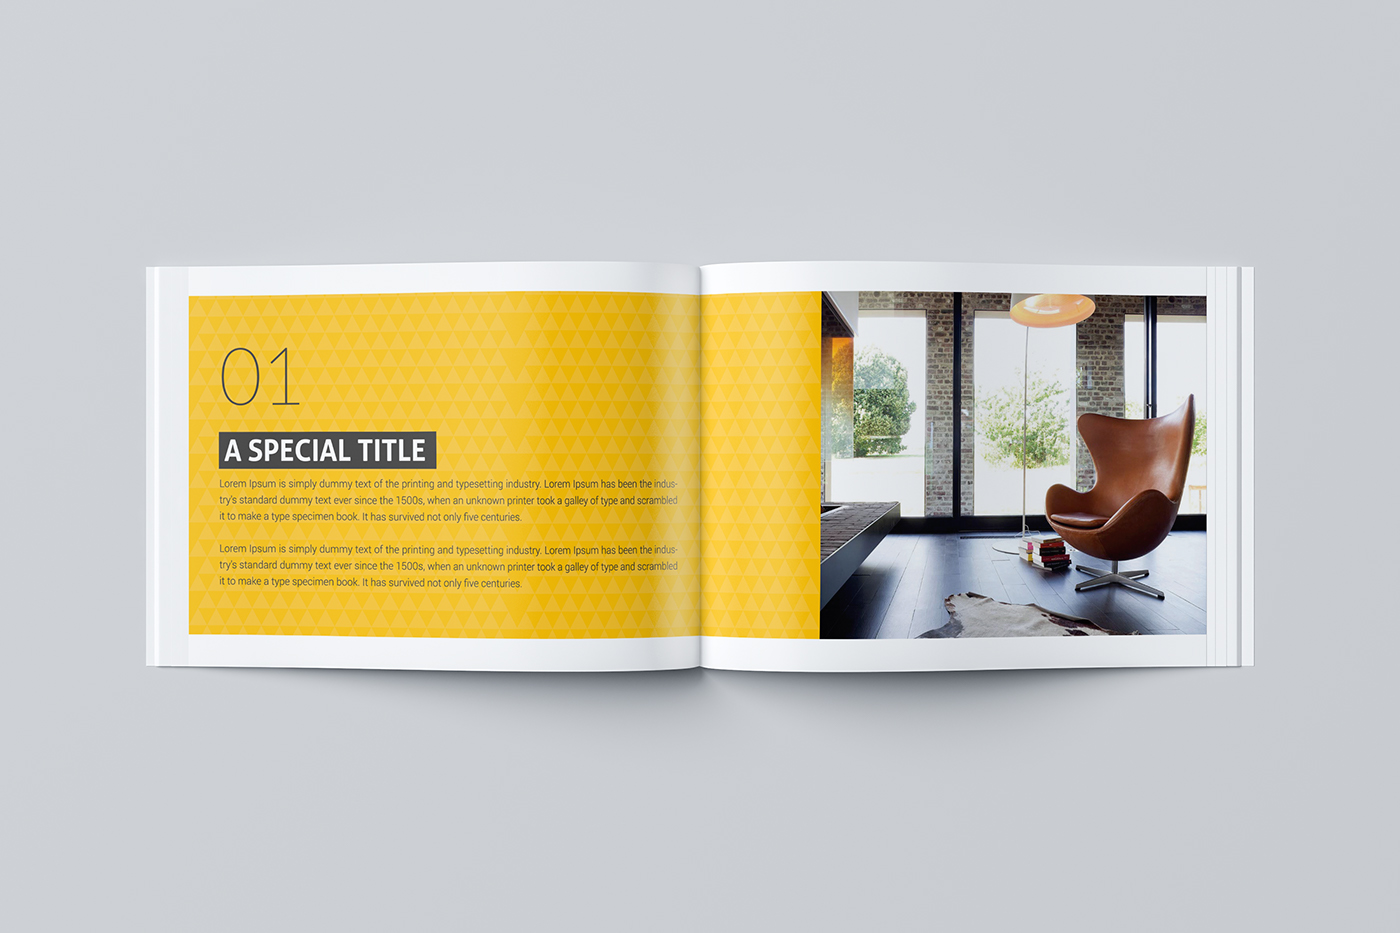 print design book magazine Interior furniture chair Couch home Creativity yellow